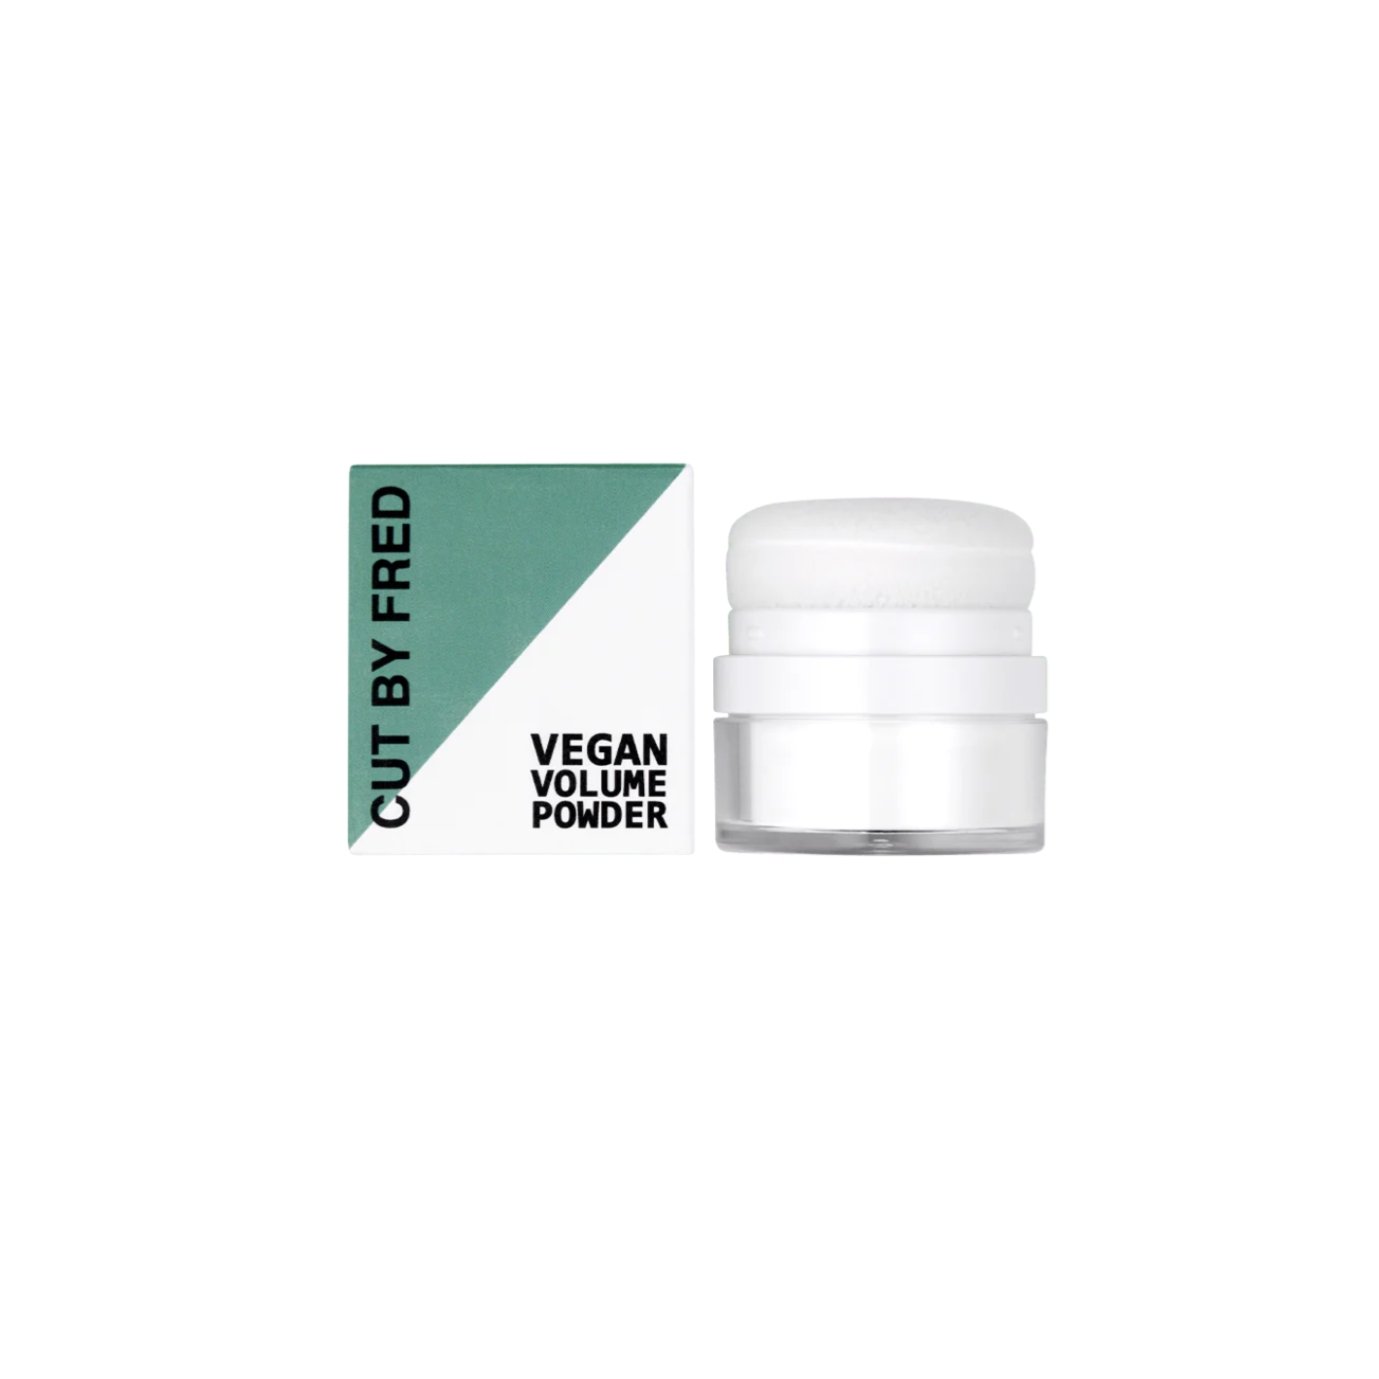 Vegan volume powder - Maison Caldeira